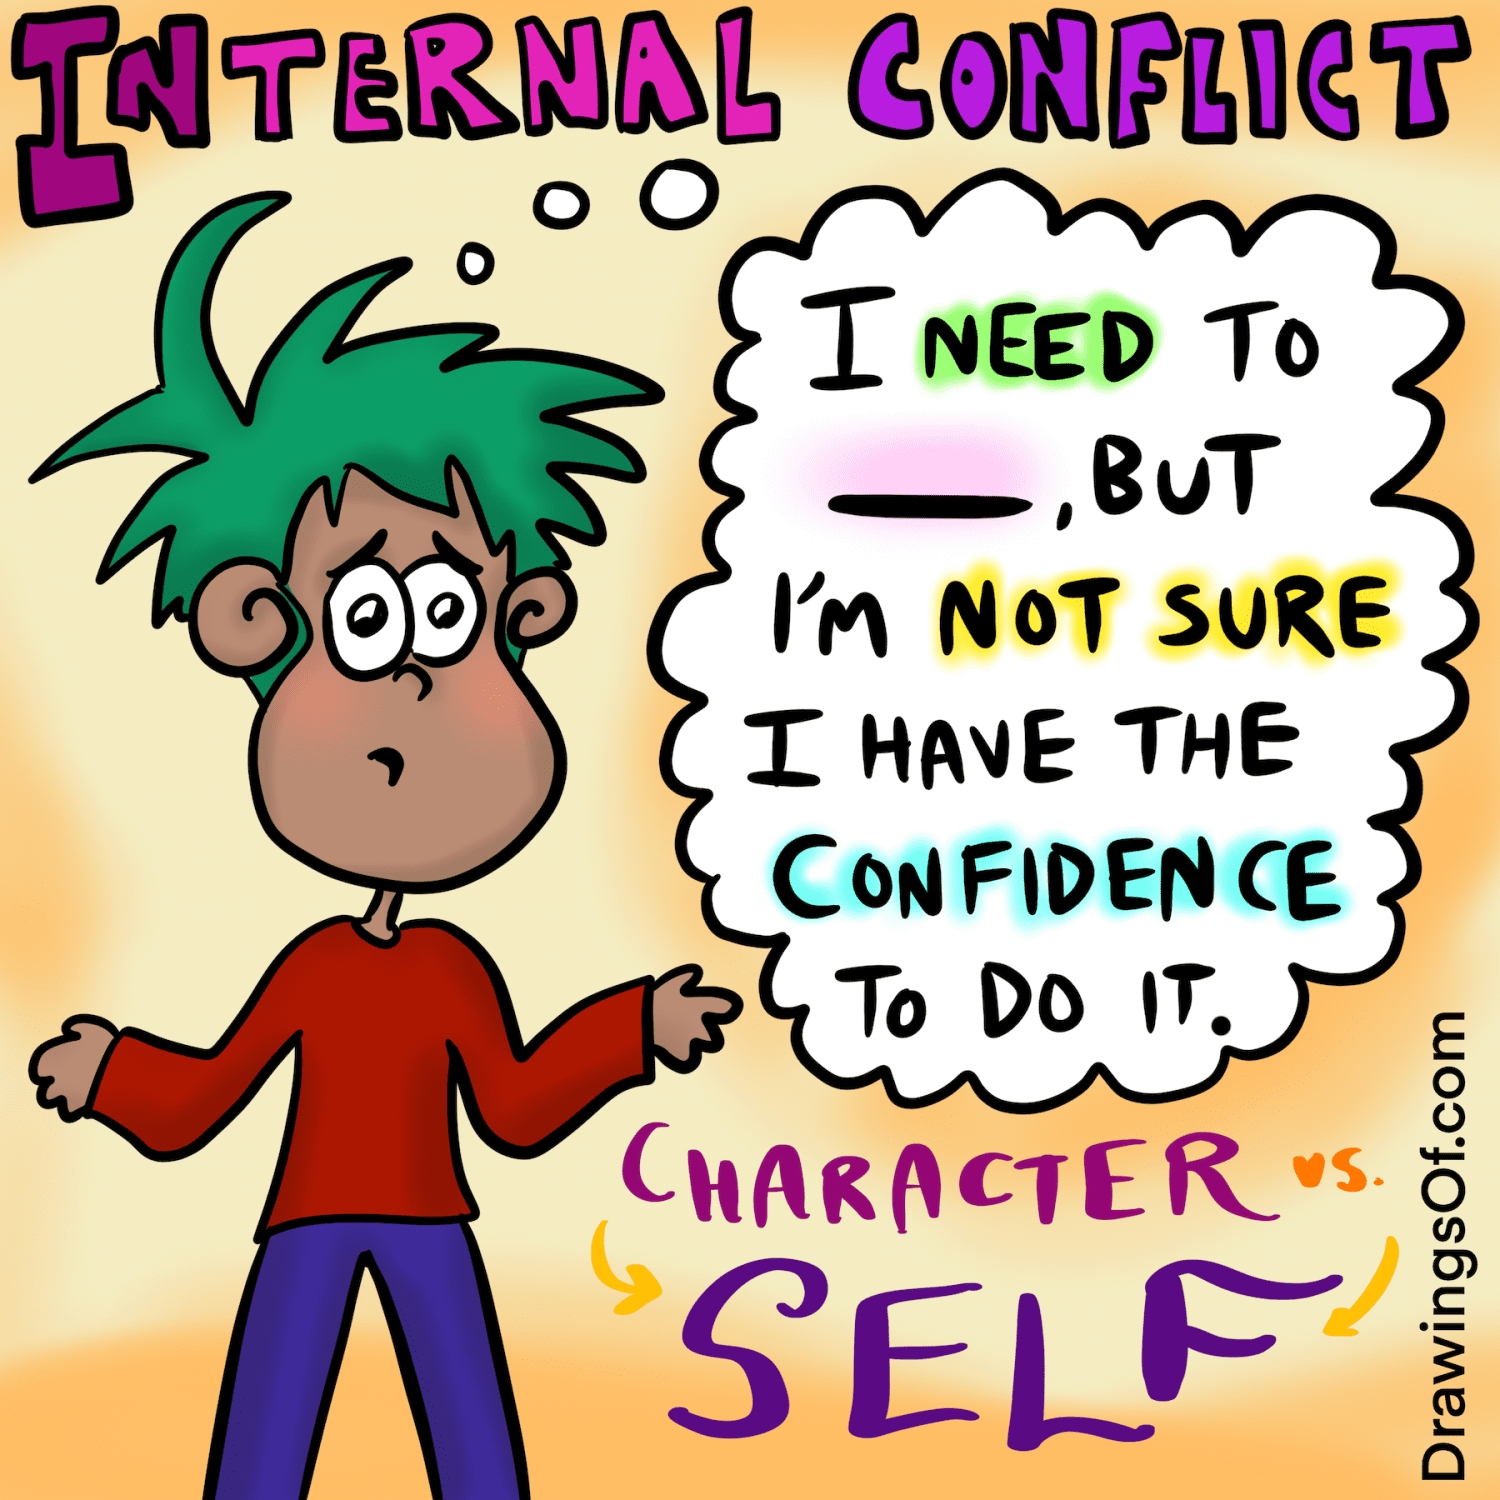 Internal Conflict